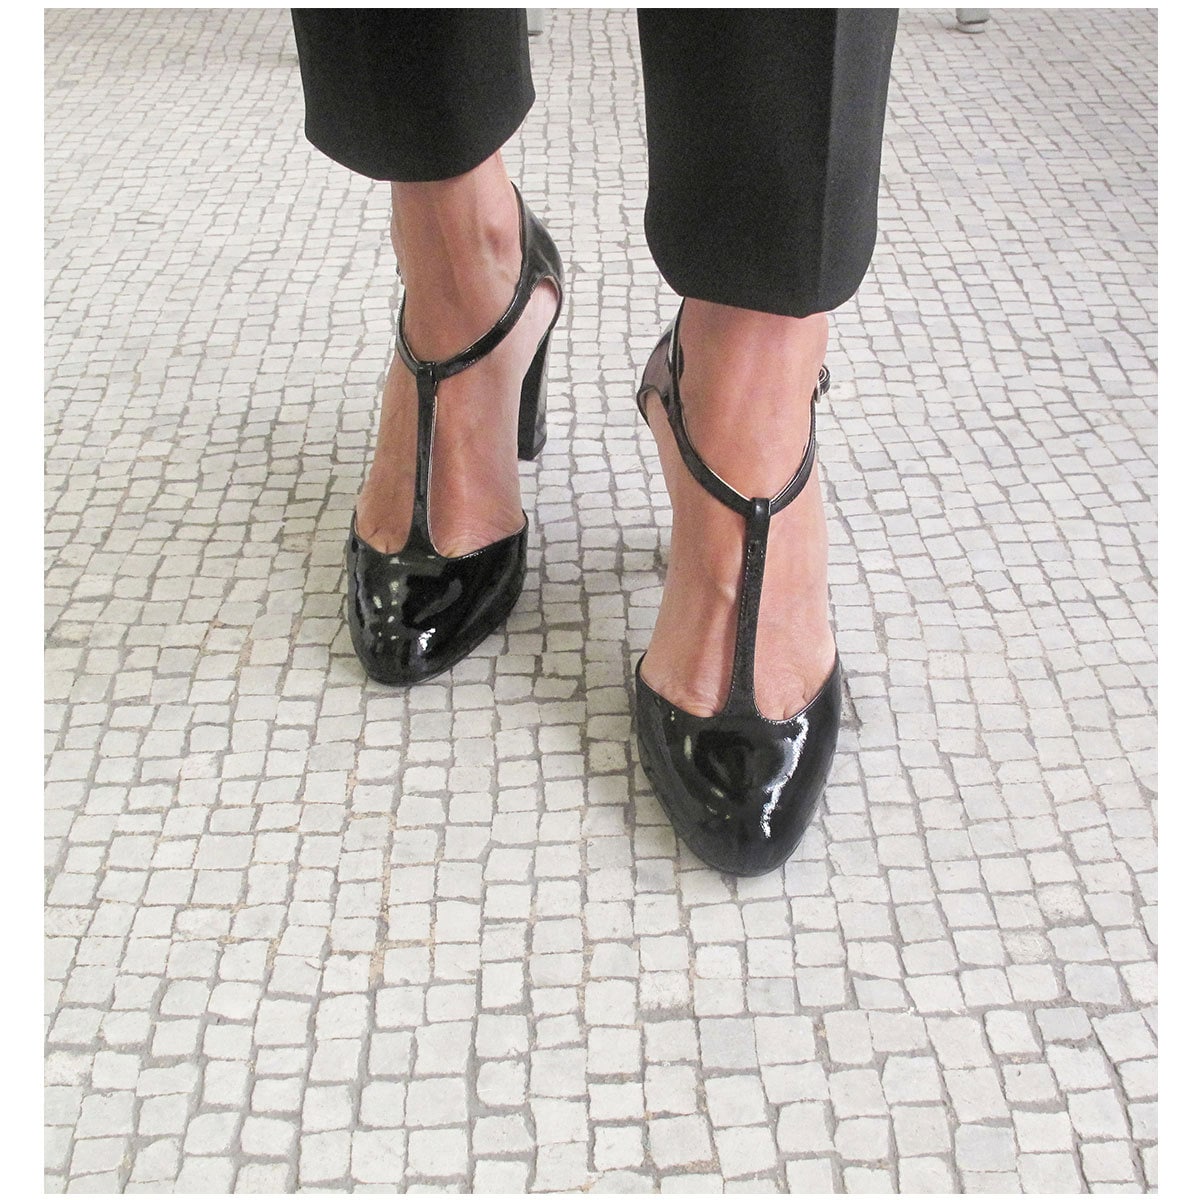 Vintage Style T-strap Shoes. Women Black Leather and Patient 